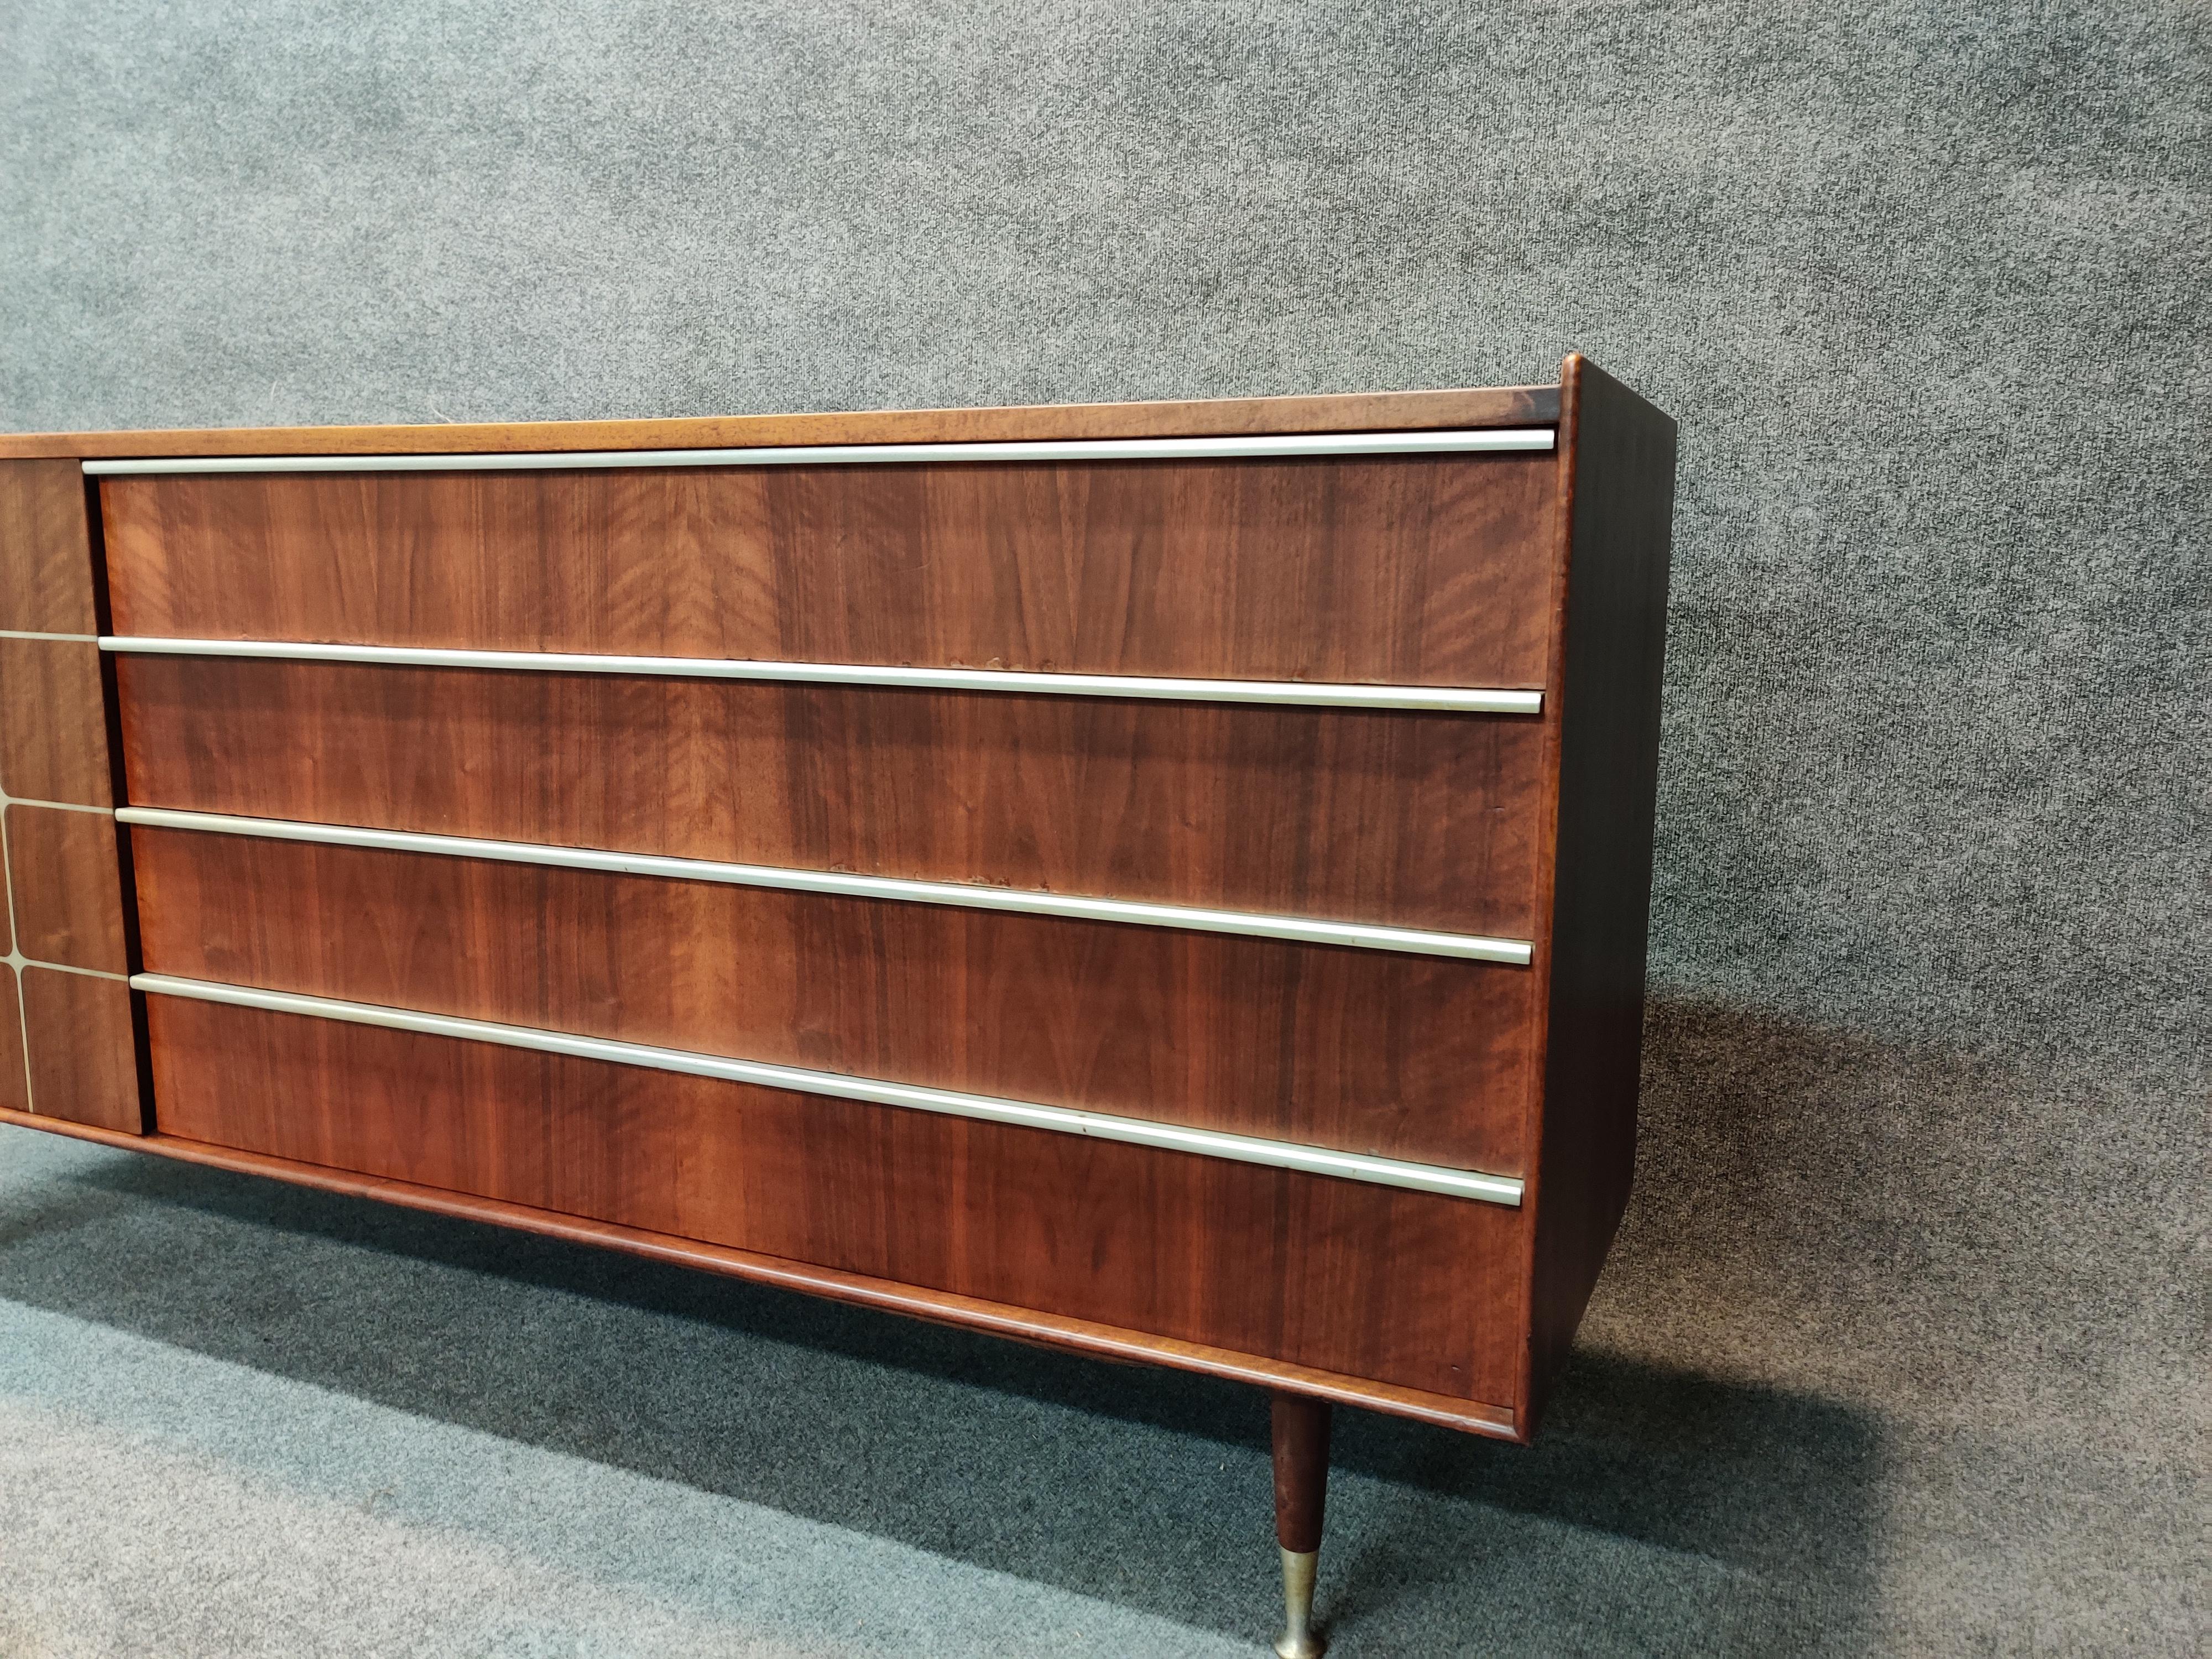 North American Edmond Spence MId-Century Modern Classic Sideboard Cabinet Walnut Inlaid Details